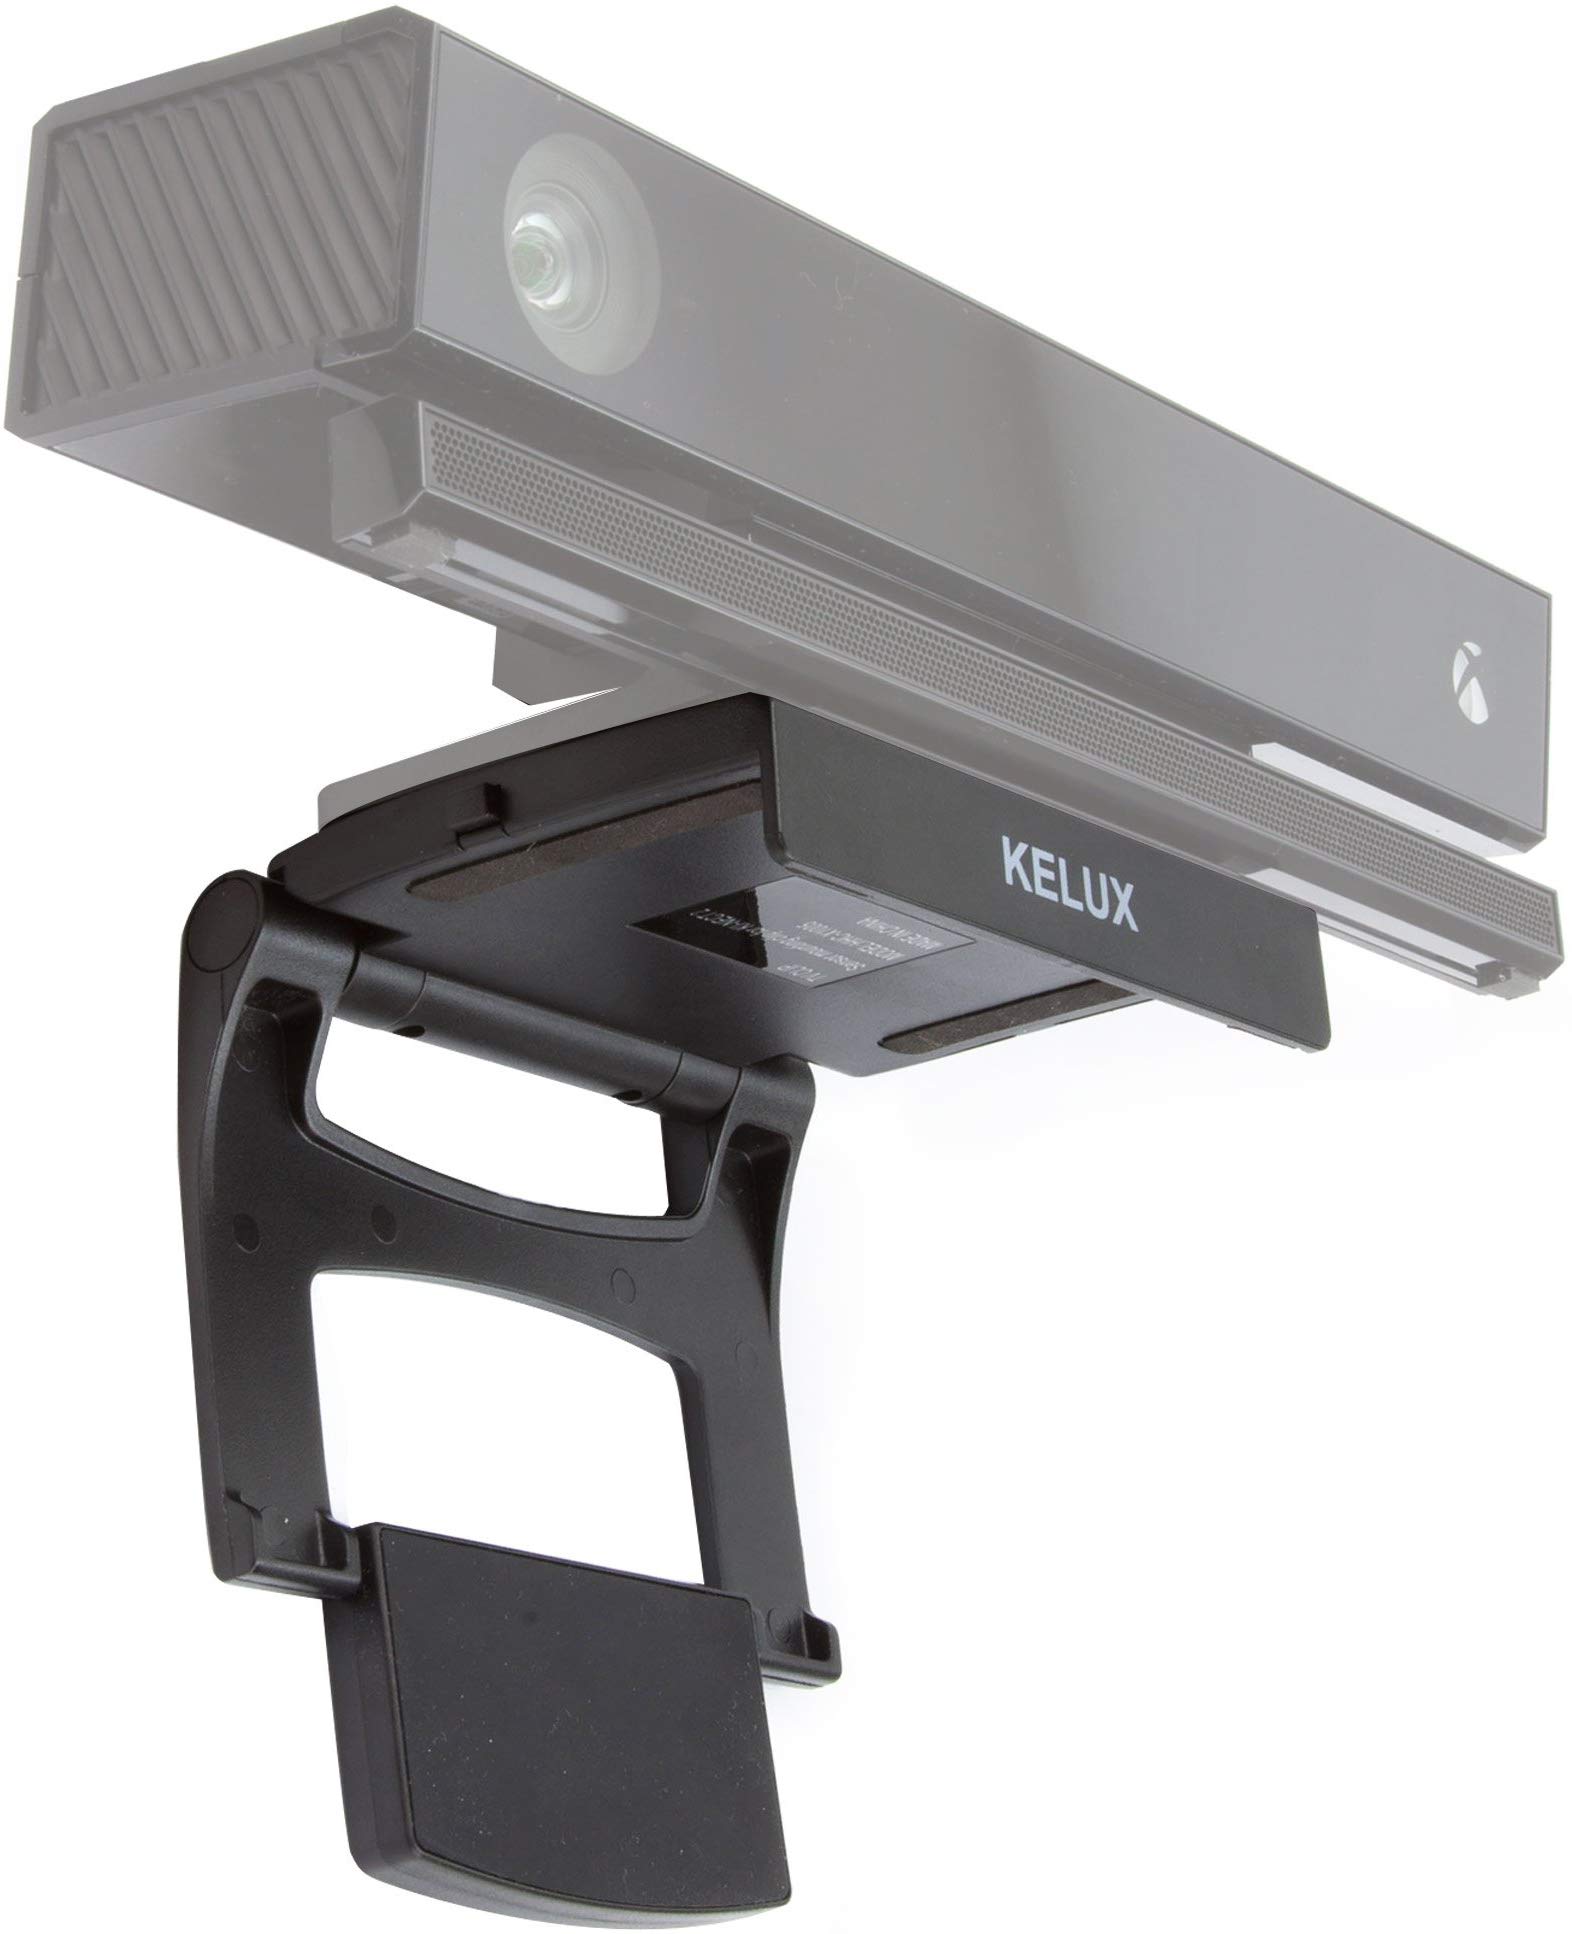 KELUX Kinect Sensor 2 TV Mounting Clip (Xbox one)